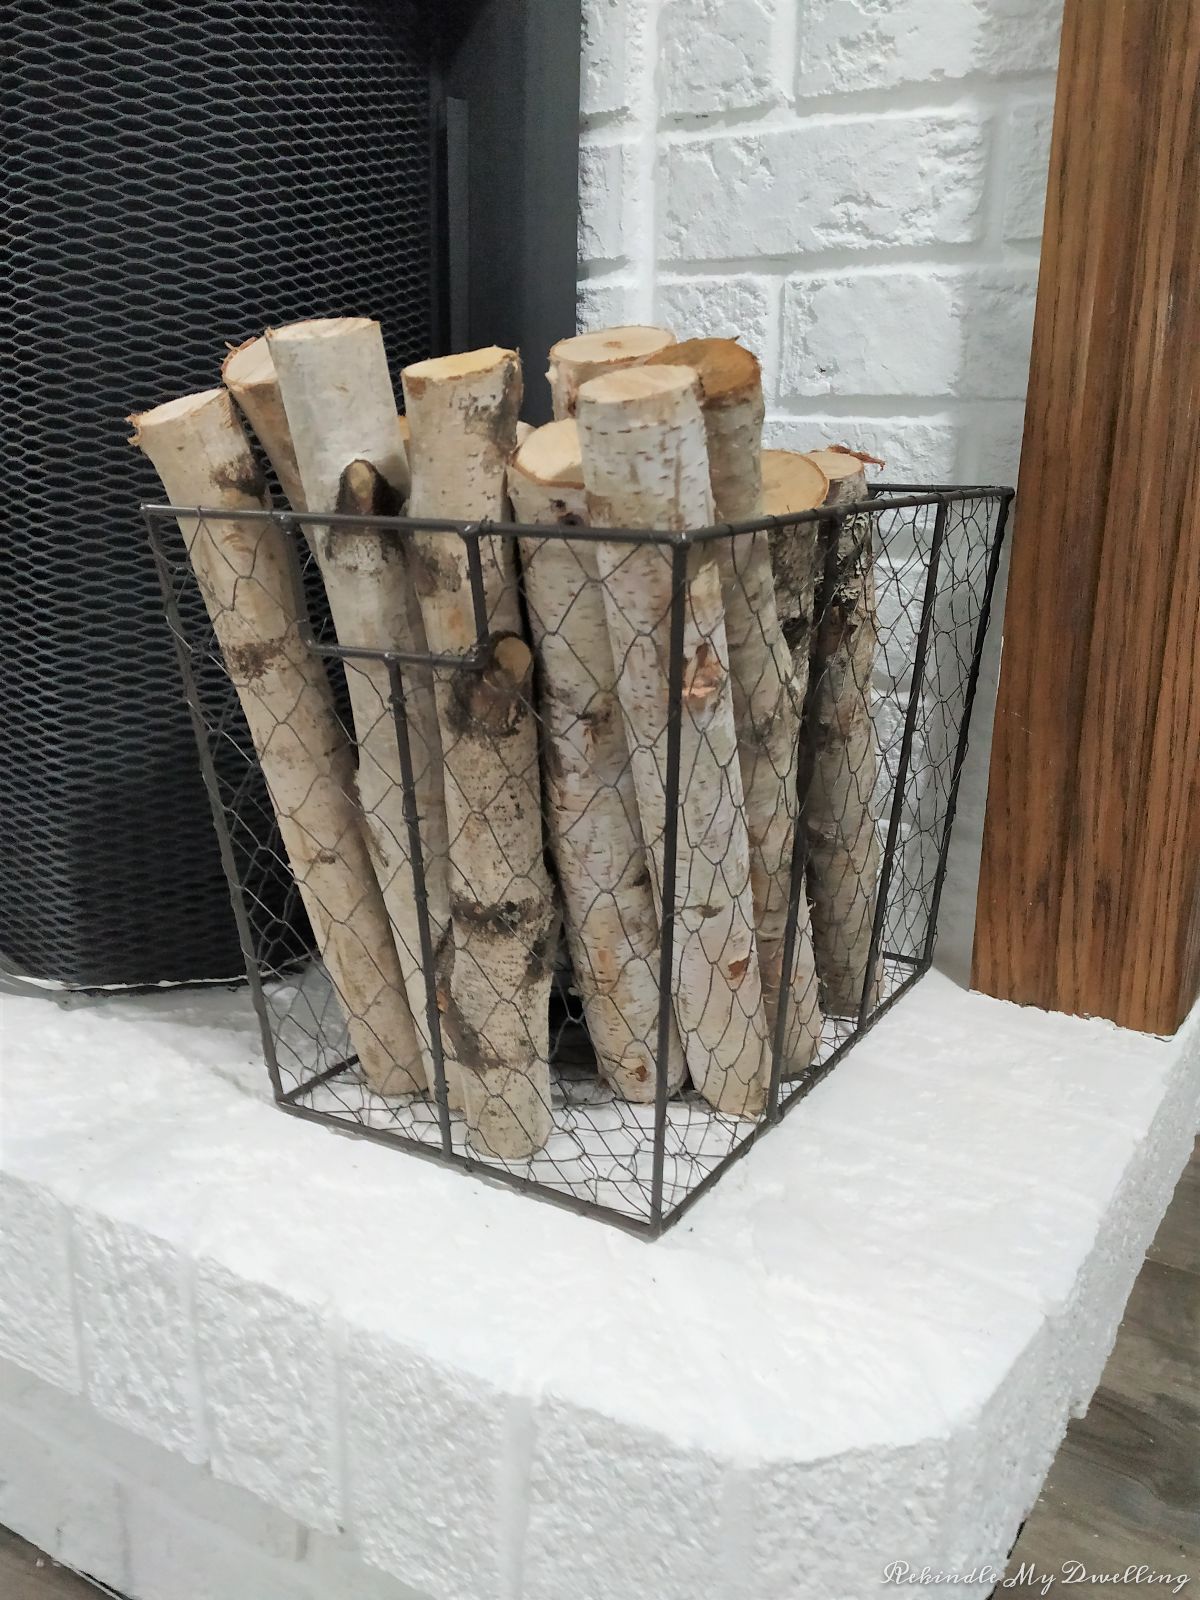 Birch wood in a wired basket.